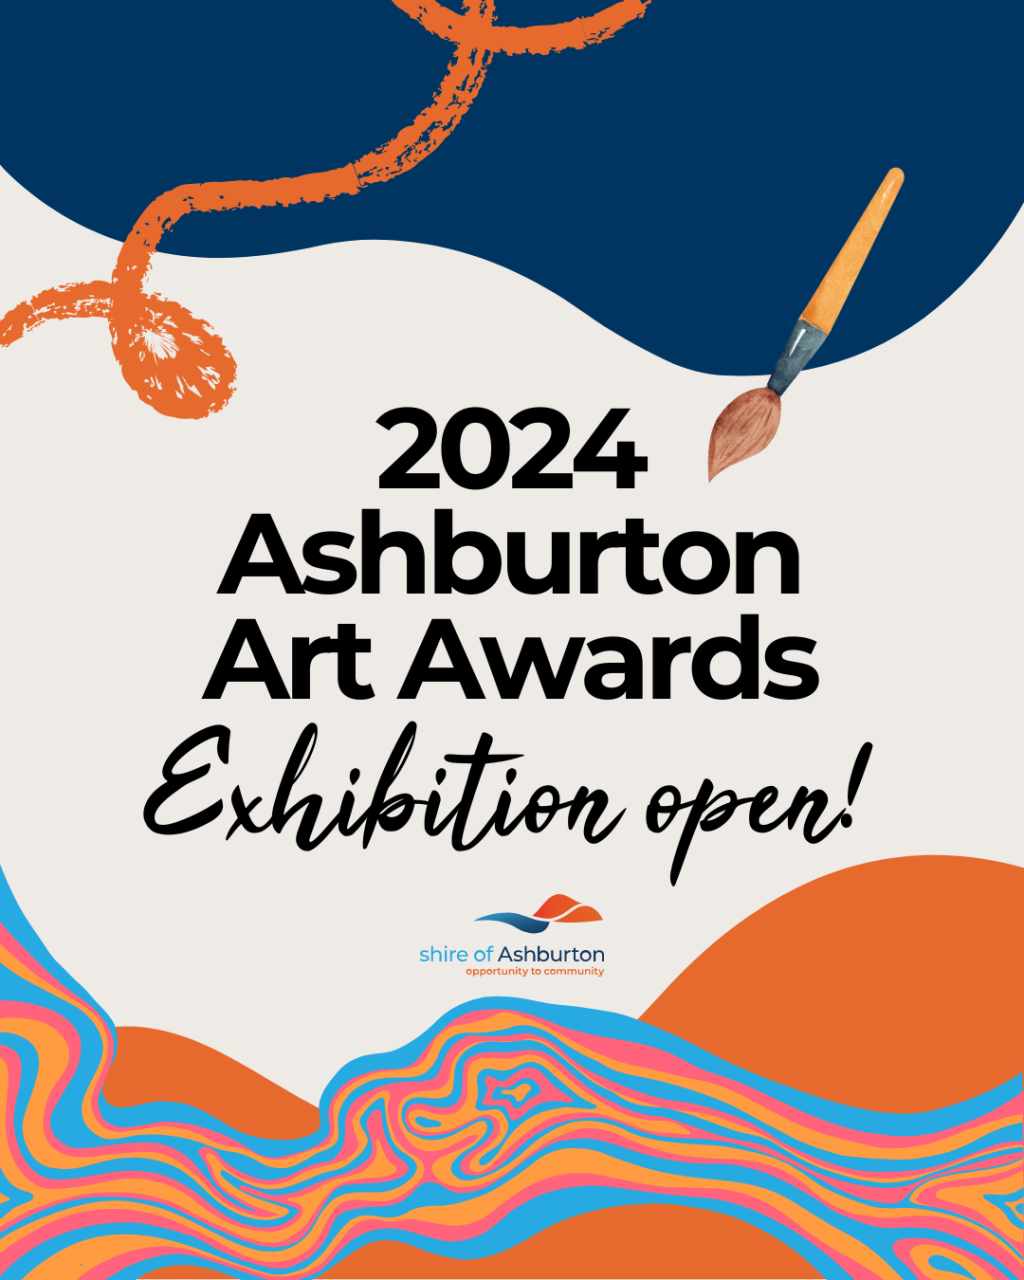 Ashburton Art Awards Exhibition Open!